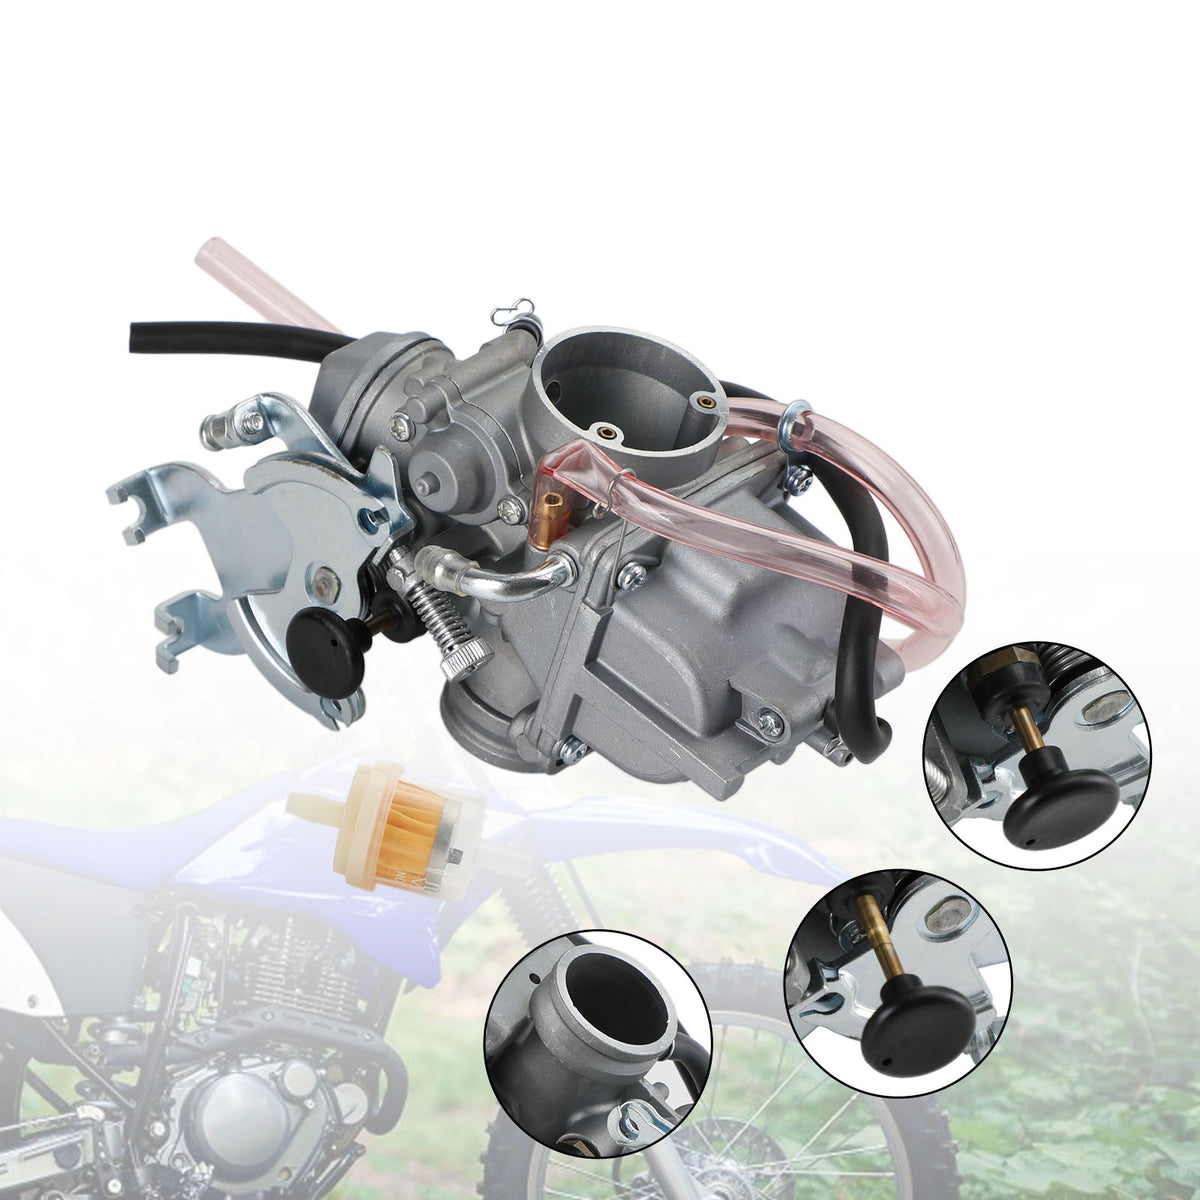 Carburatore Carb adatto per Yamaha TTR-230 TTR 230 2005-2009 1C6-14301-00-00 Generico